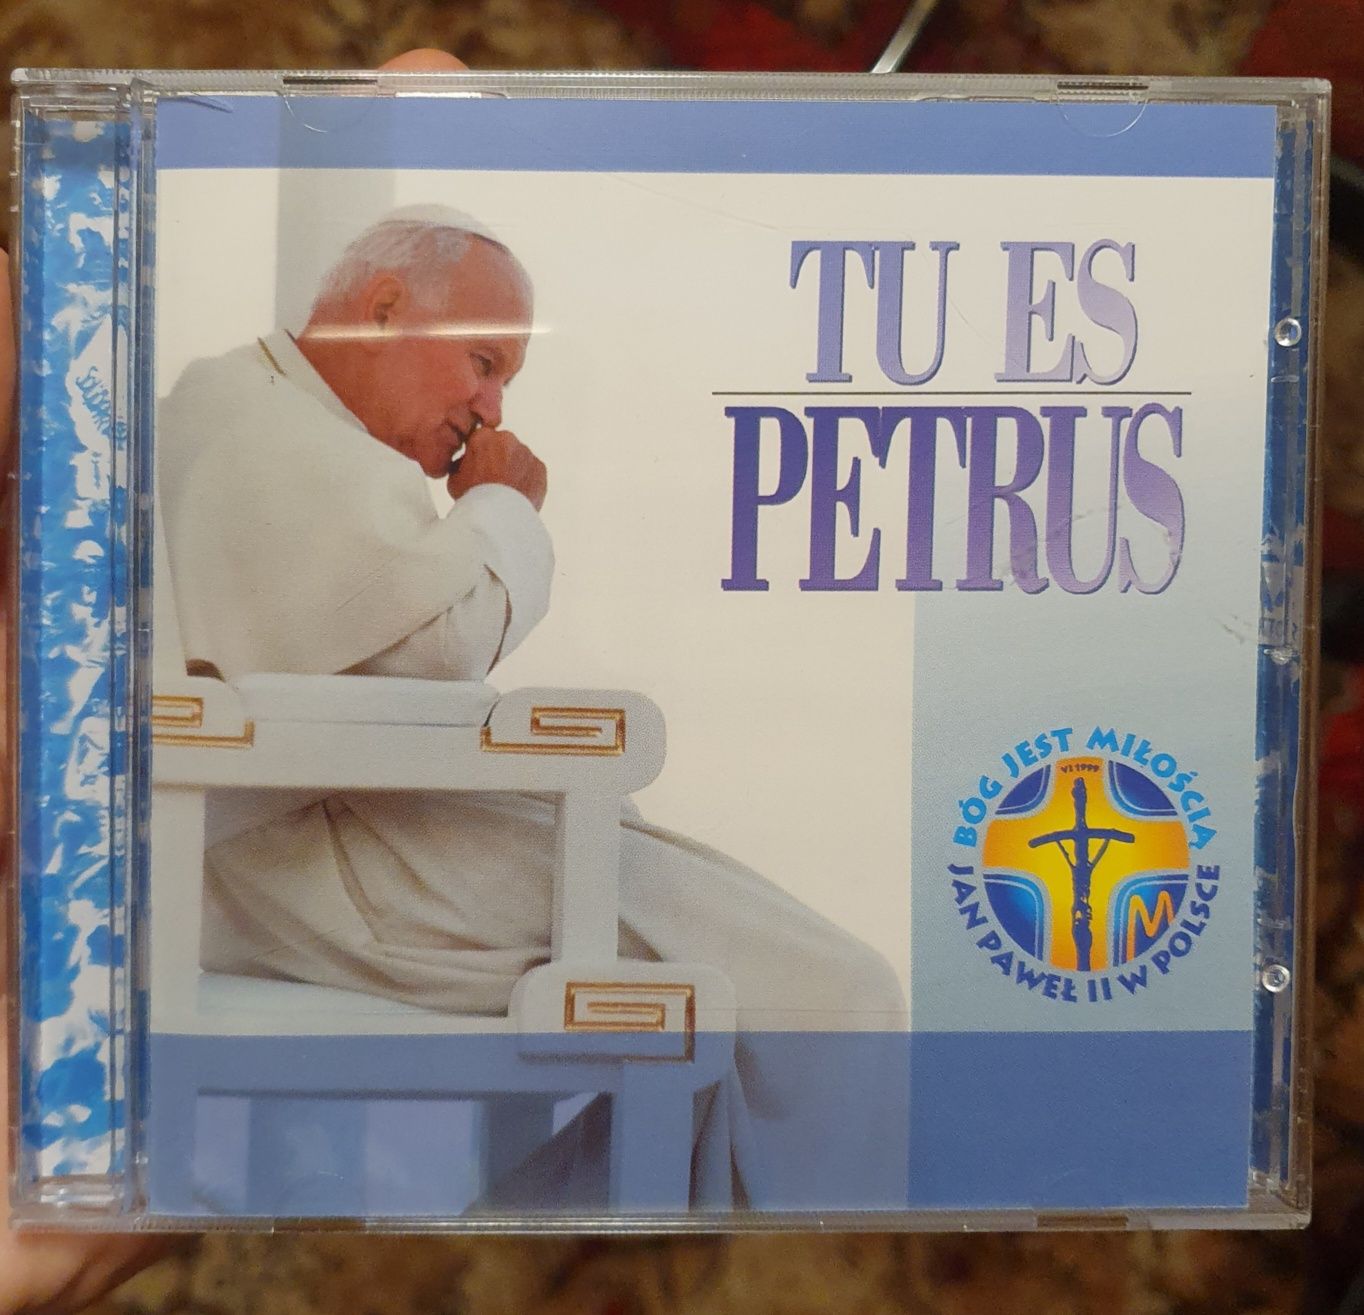 Płyta CD "Tu es petrus" Jan Paweł II